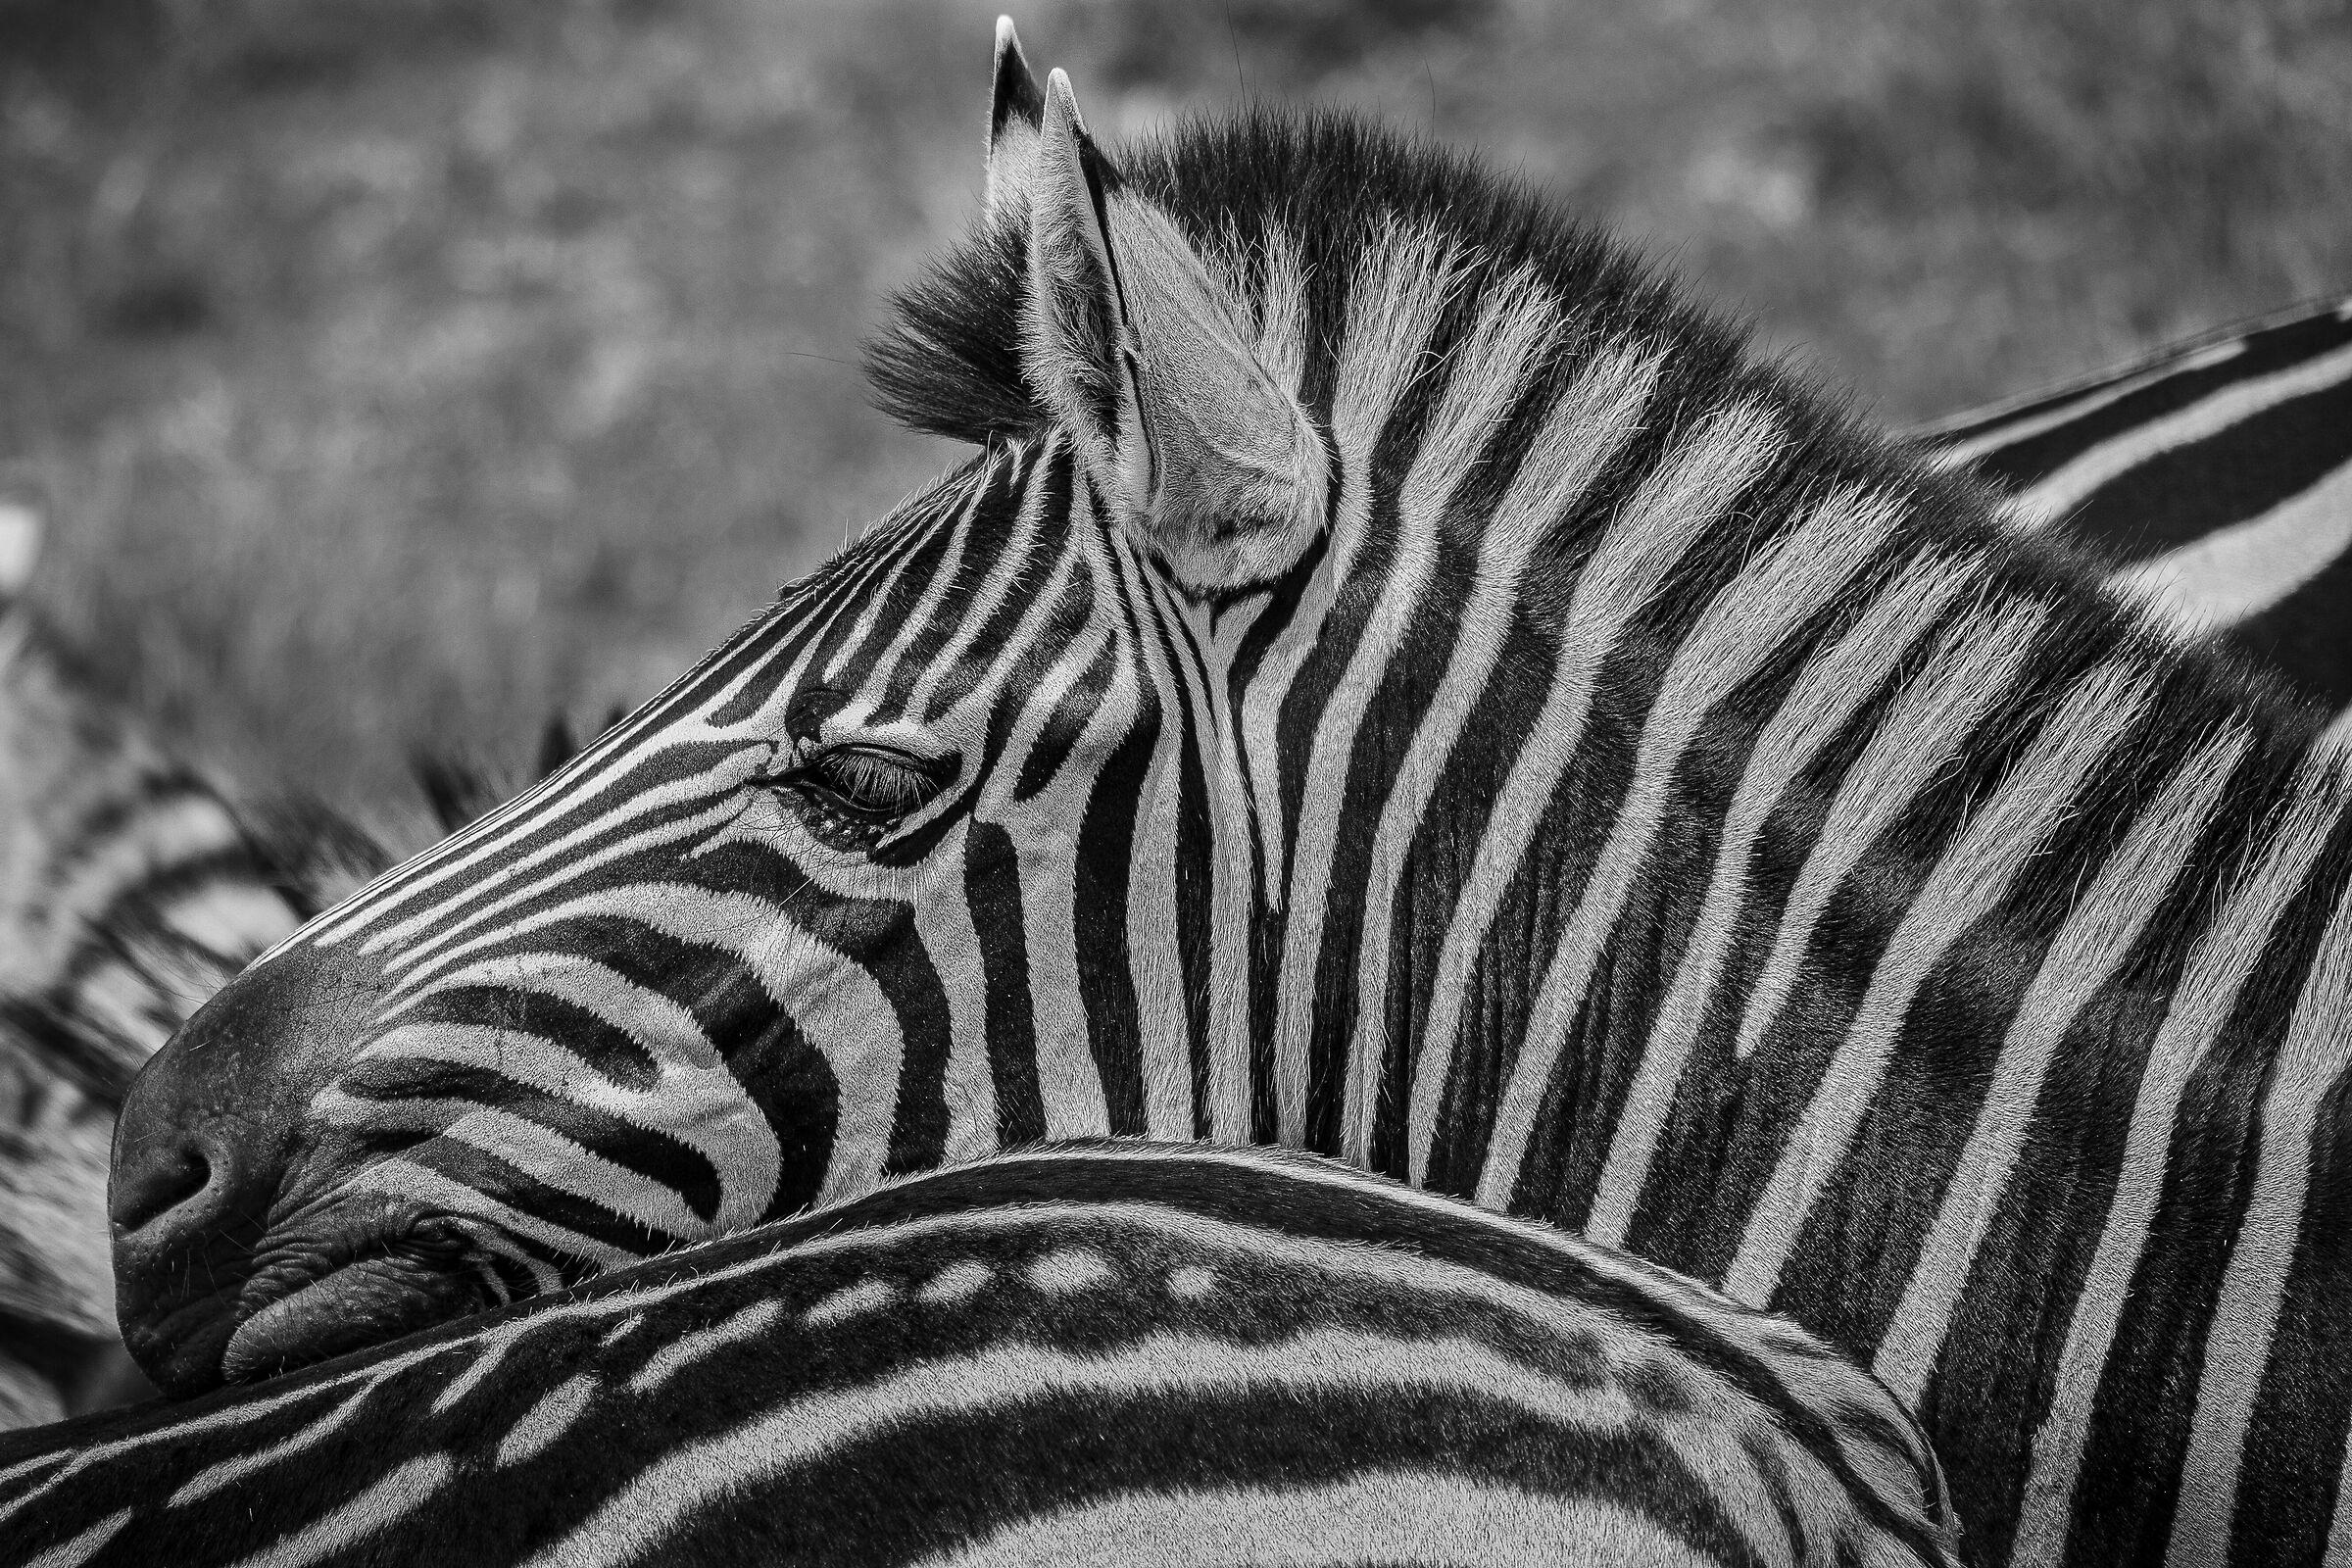 Horse safari, South Africa...